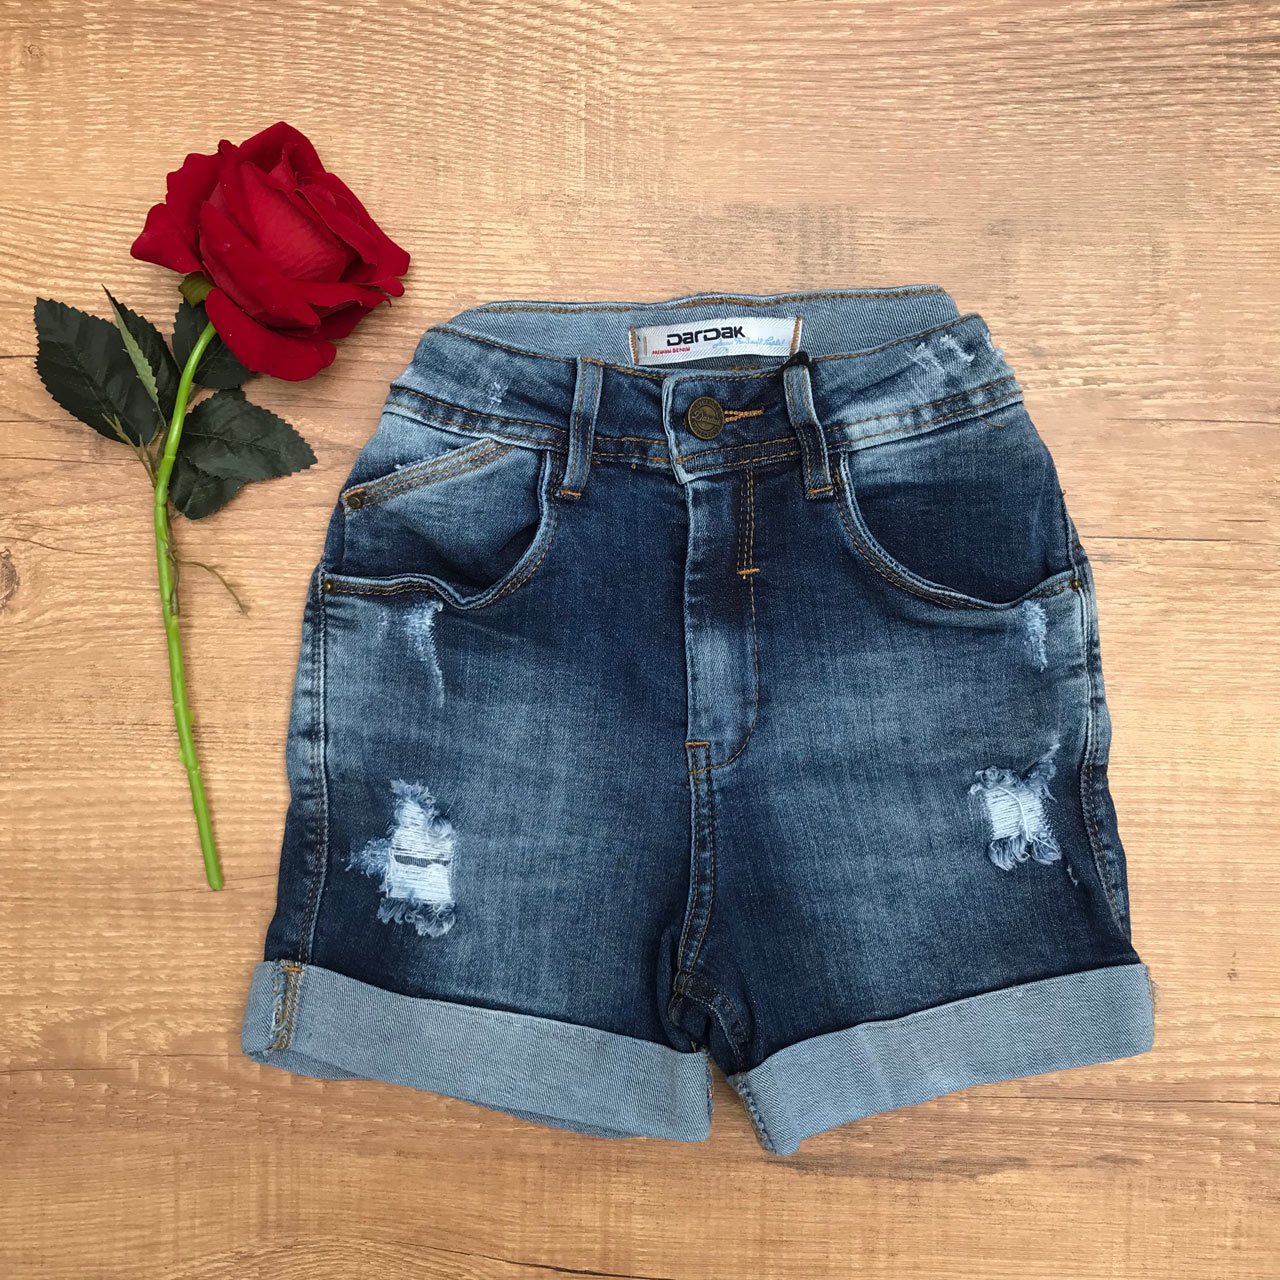 short jeans moda 2019